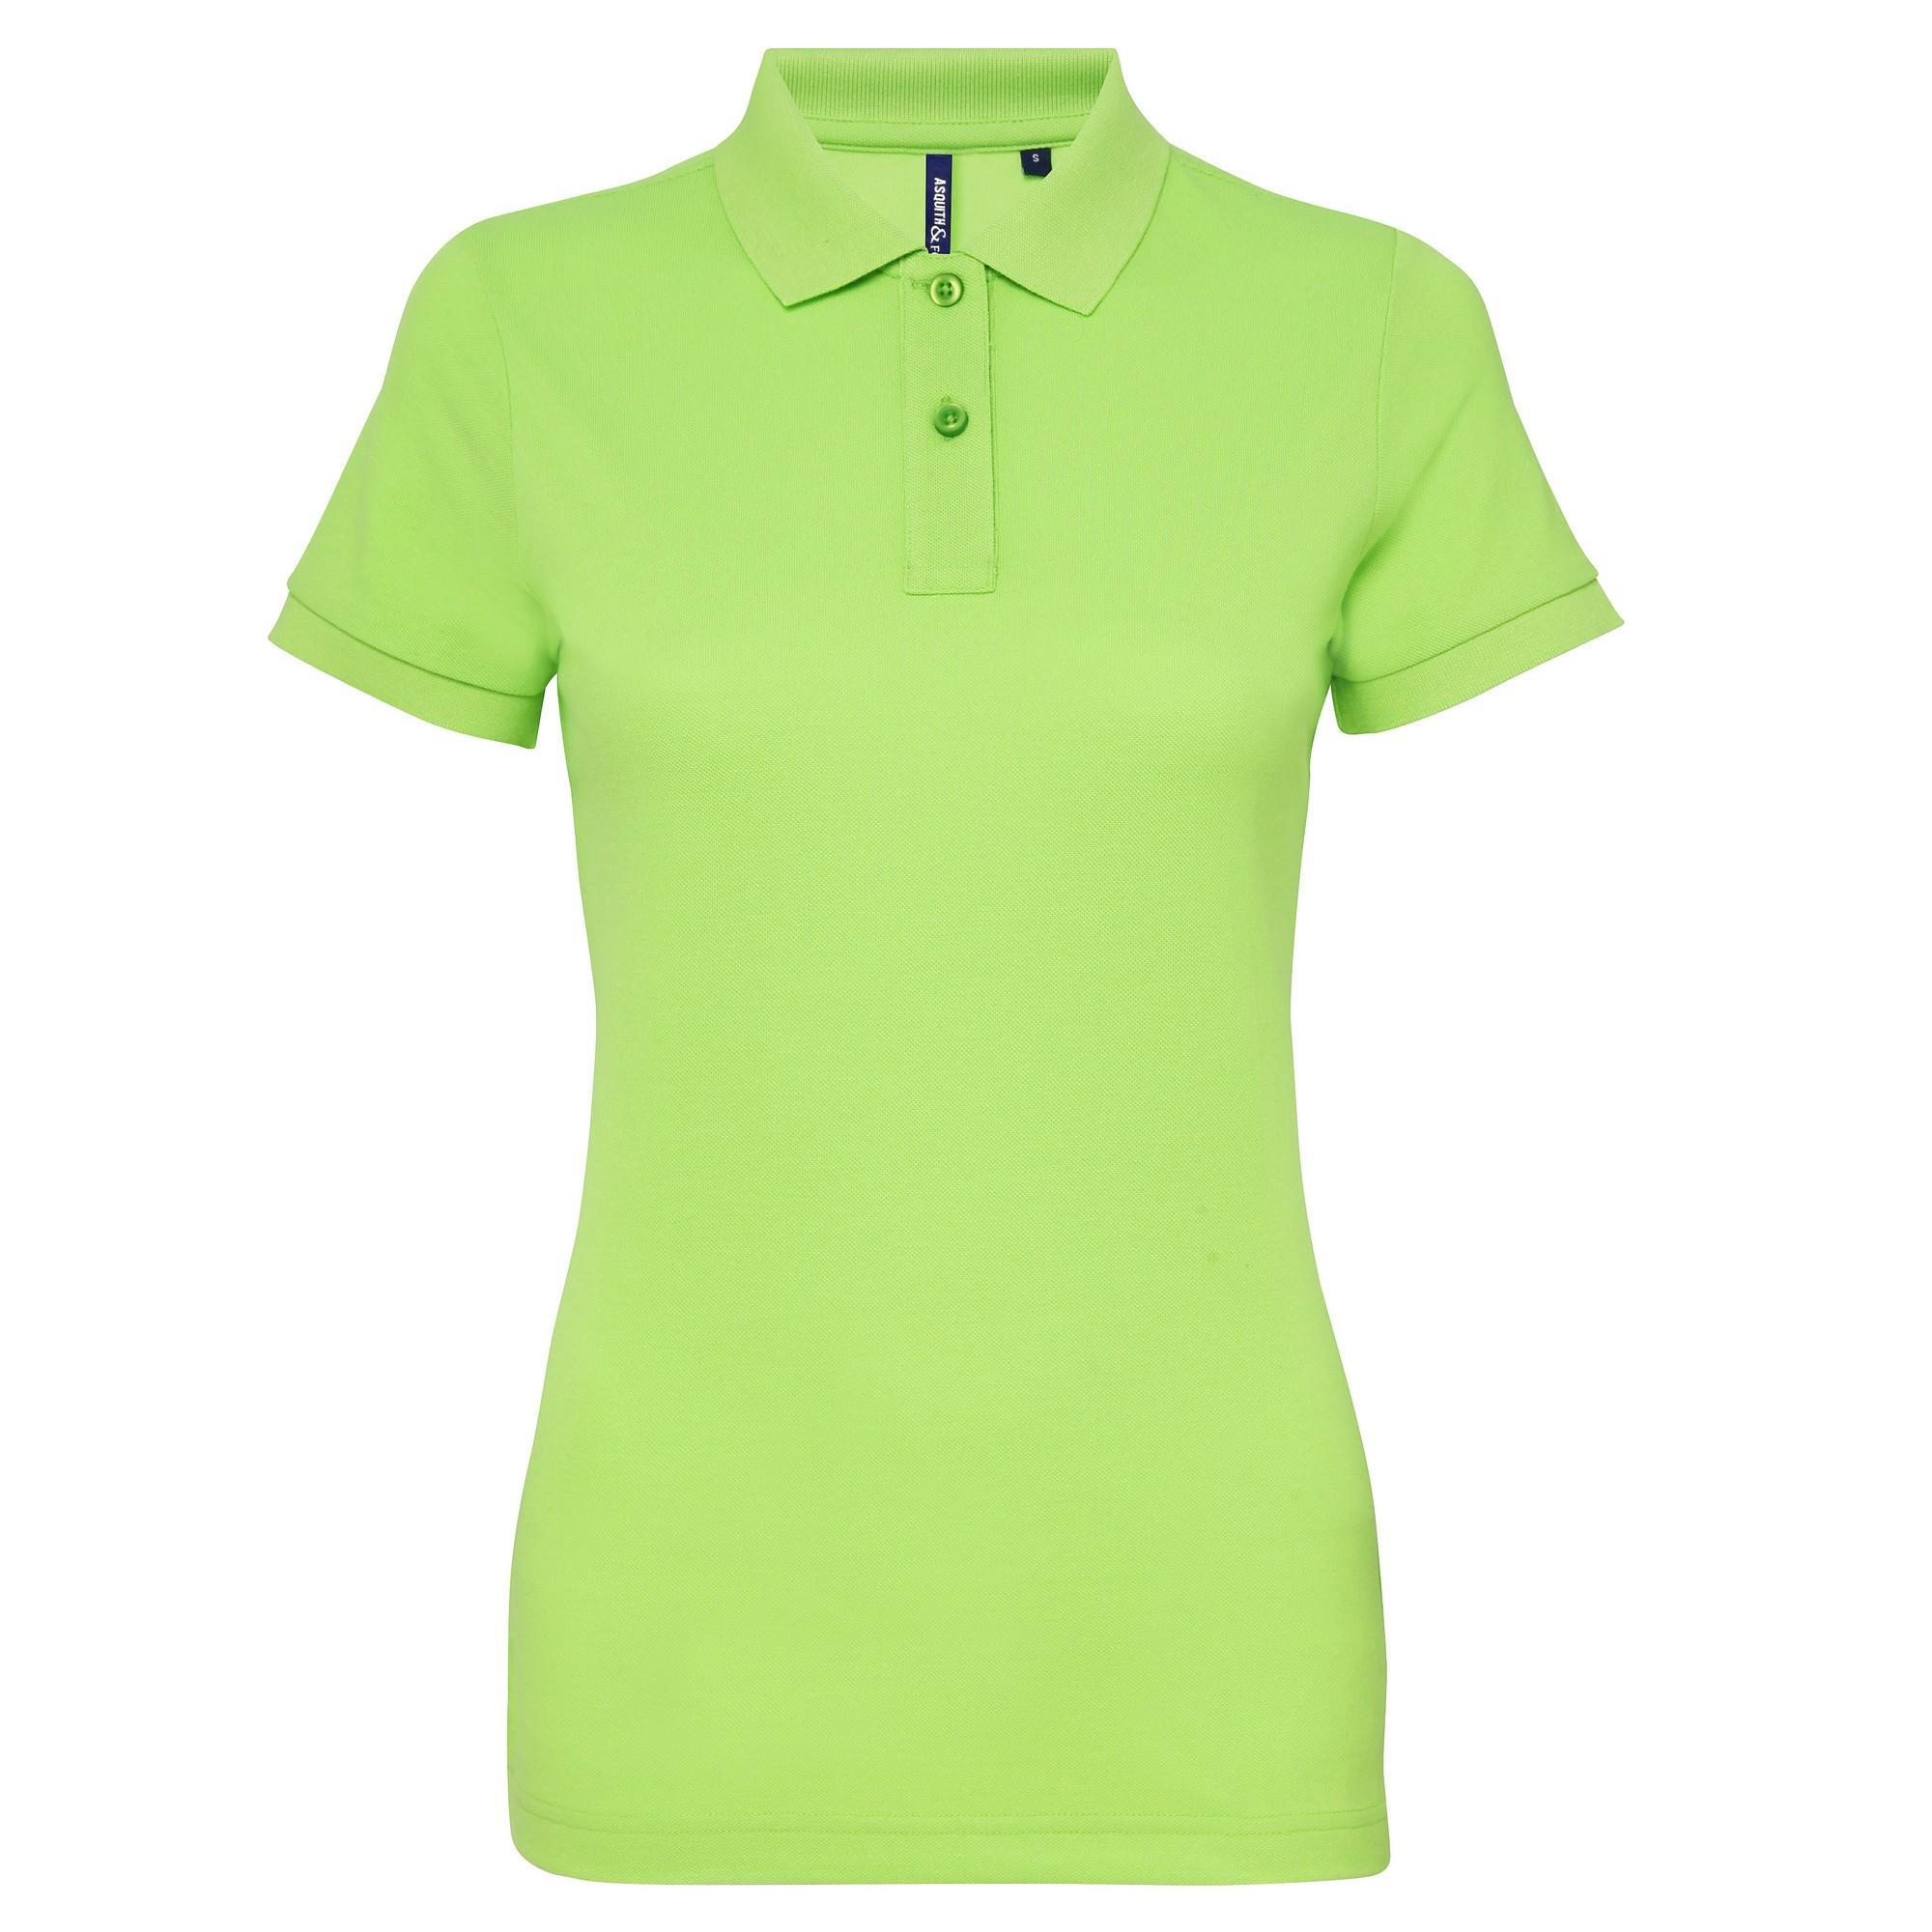 Asquith & Fox Womens/Ladies Short Sleeve Performance Blend Polo Shirt (Neon Green) (XL)